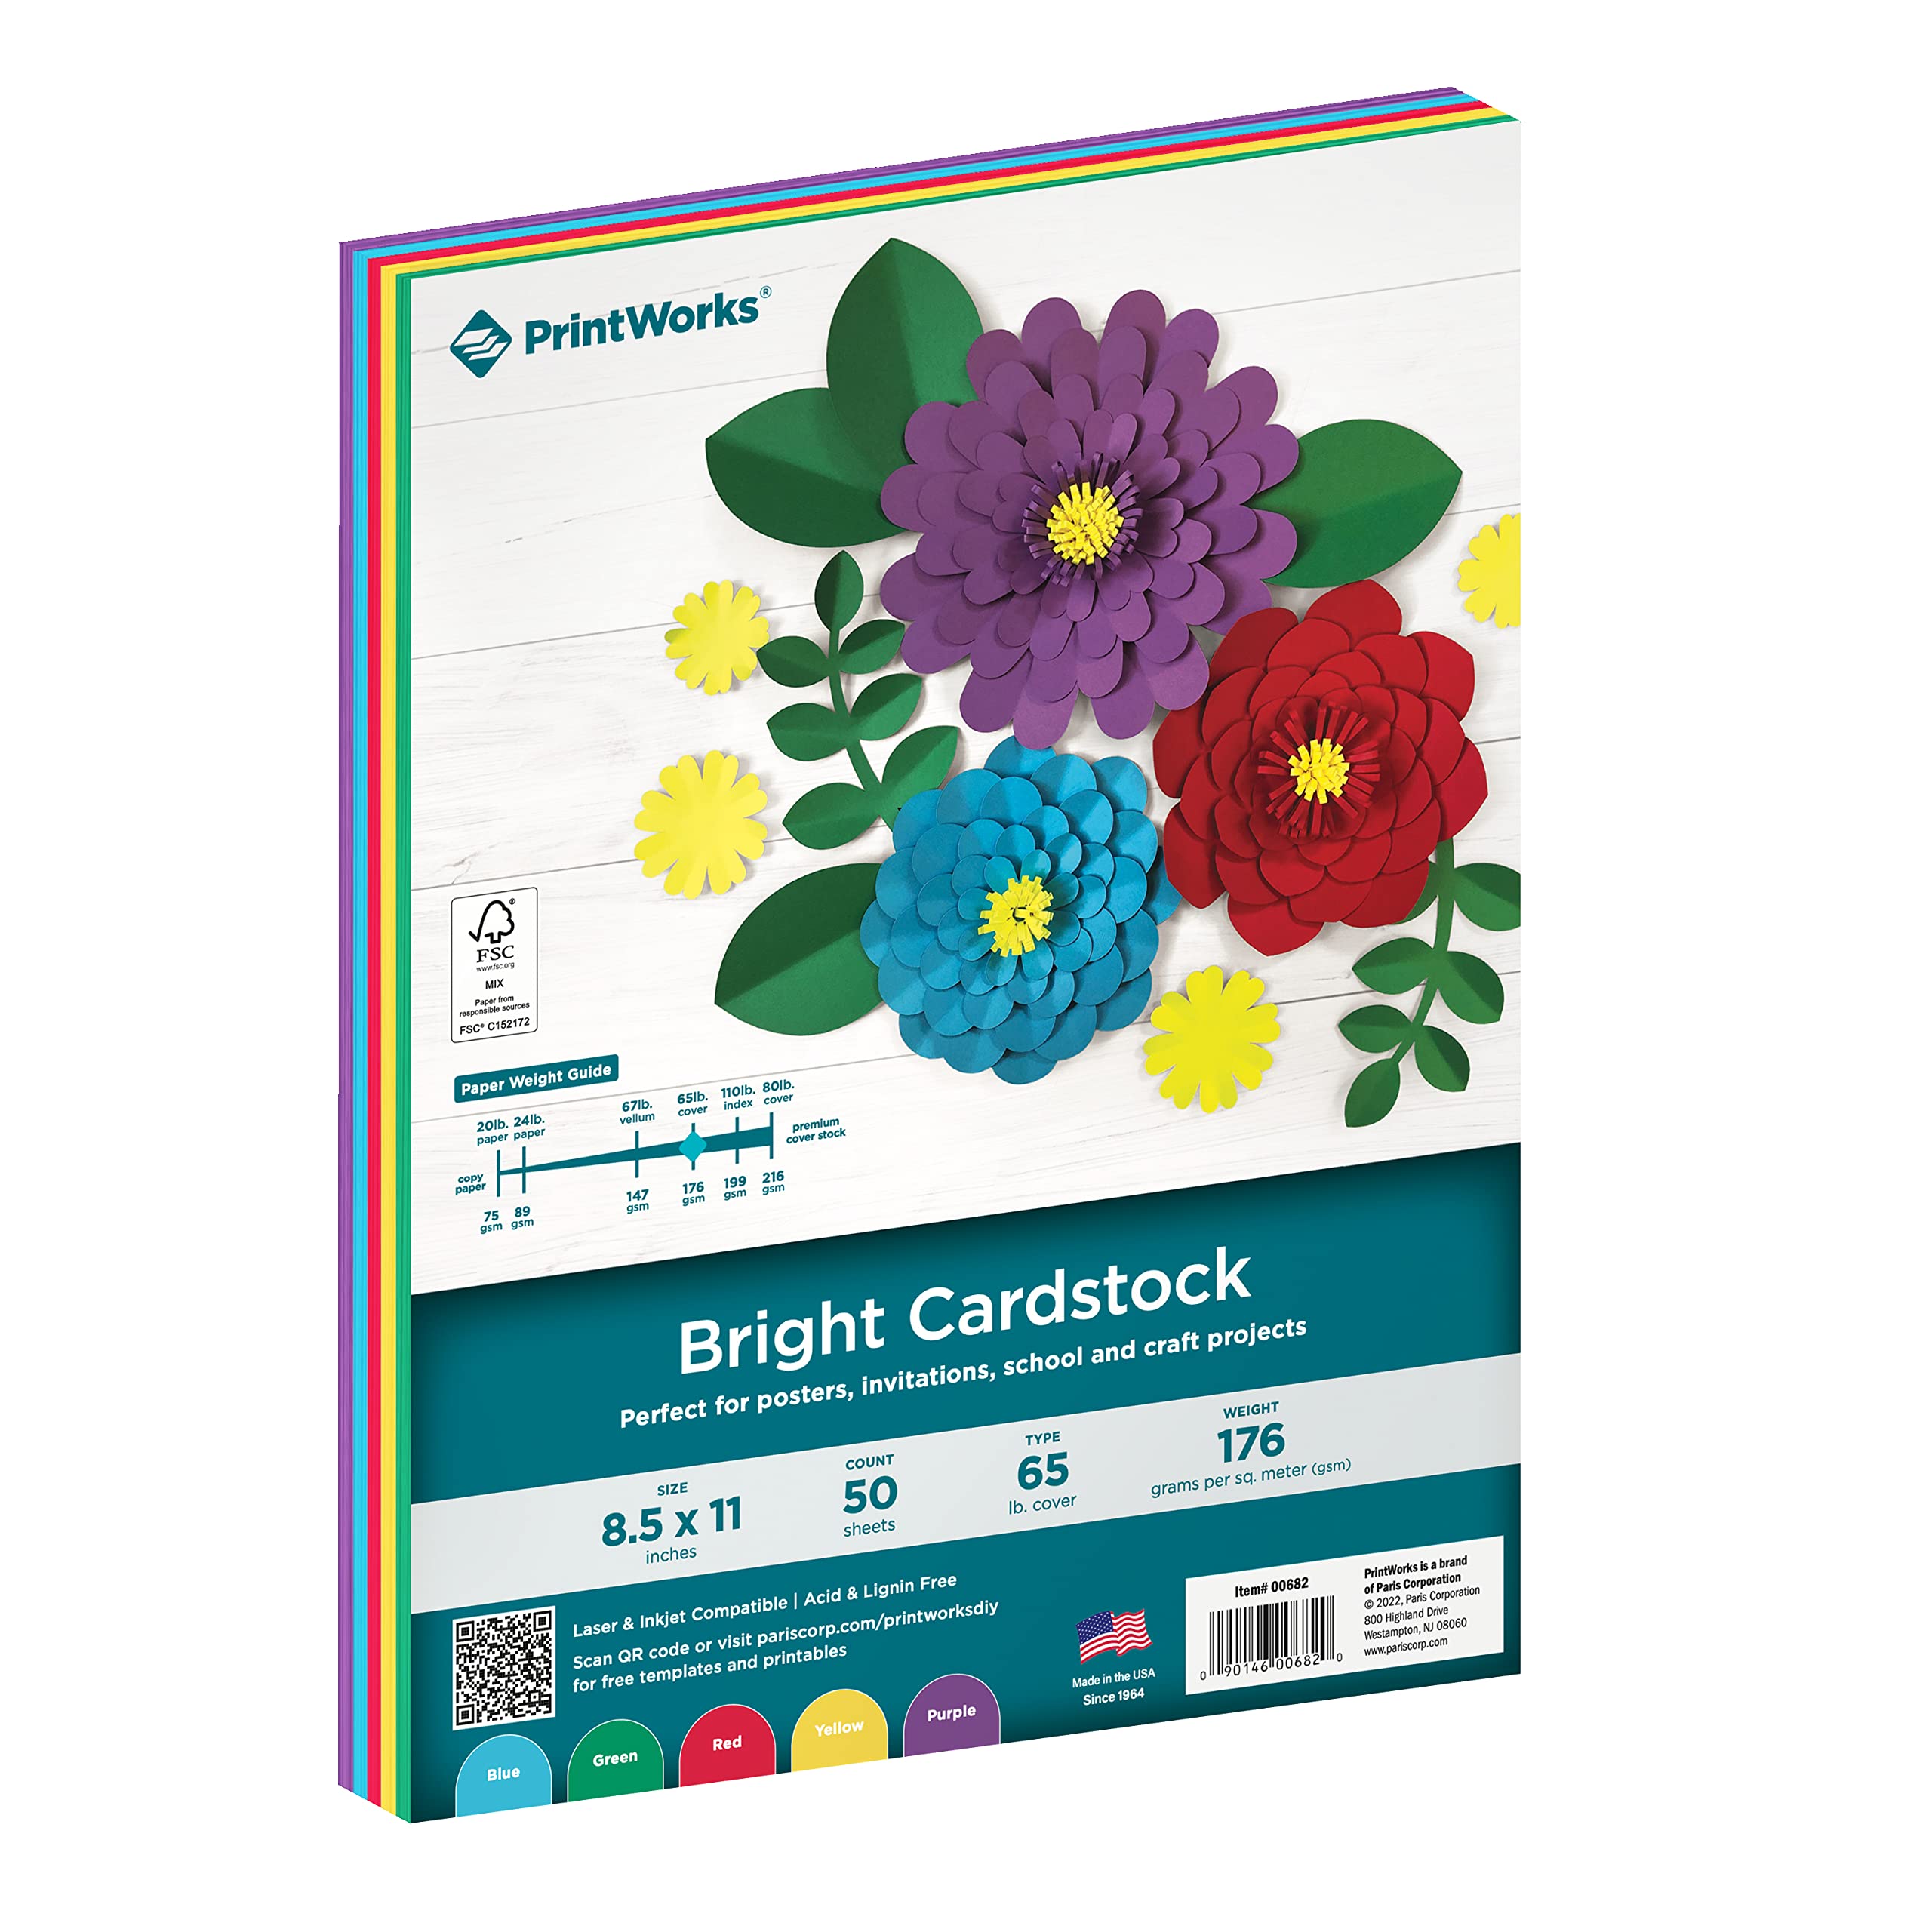 Neon Cardstock & Bright Color Paper